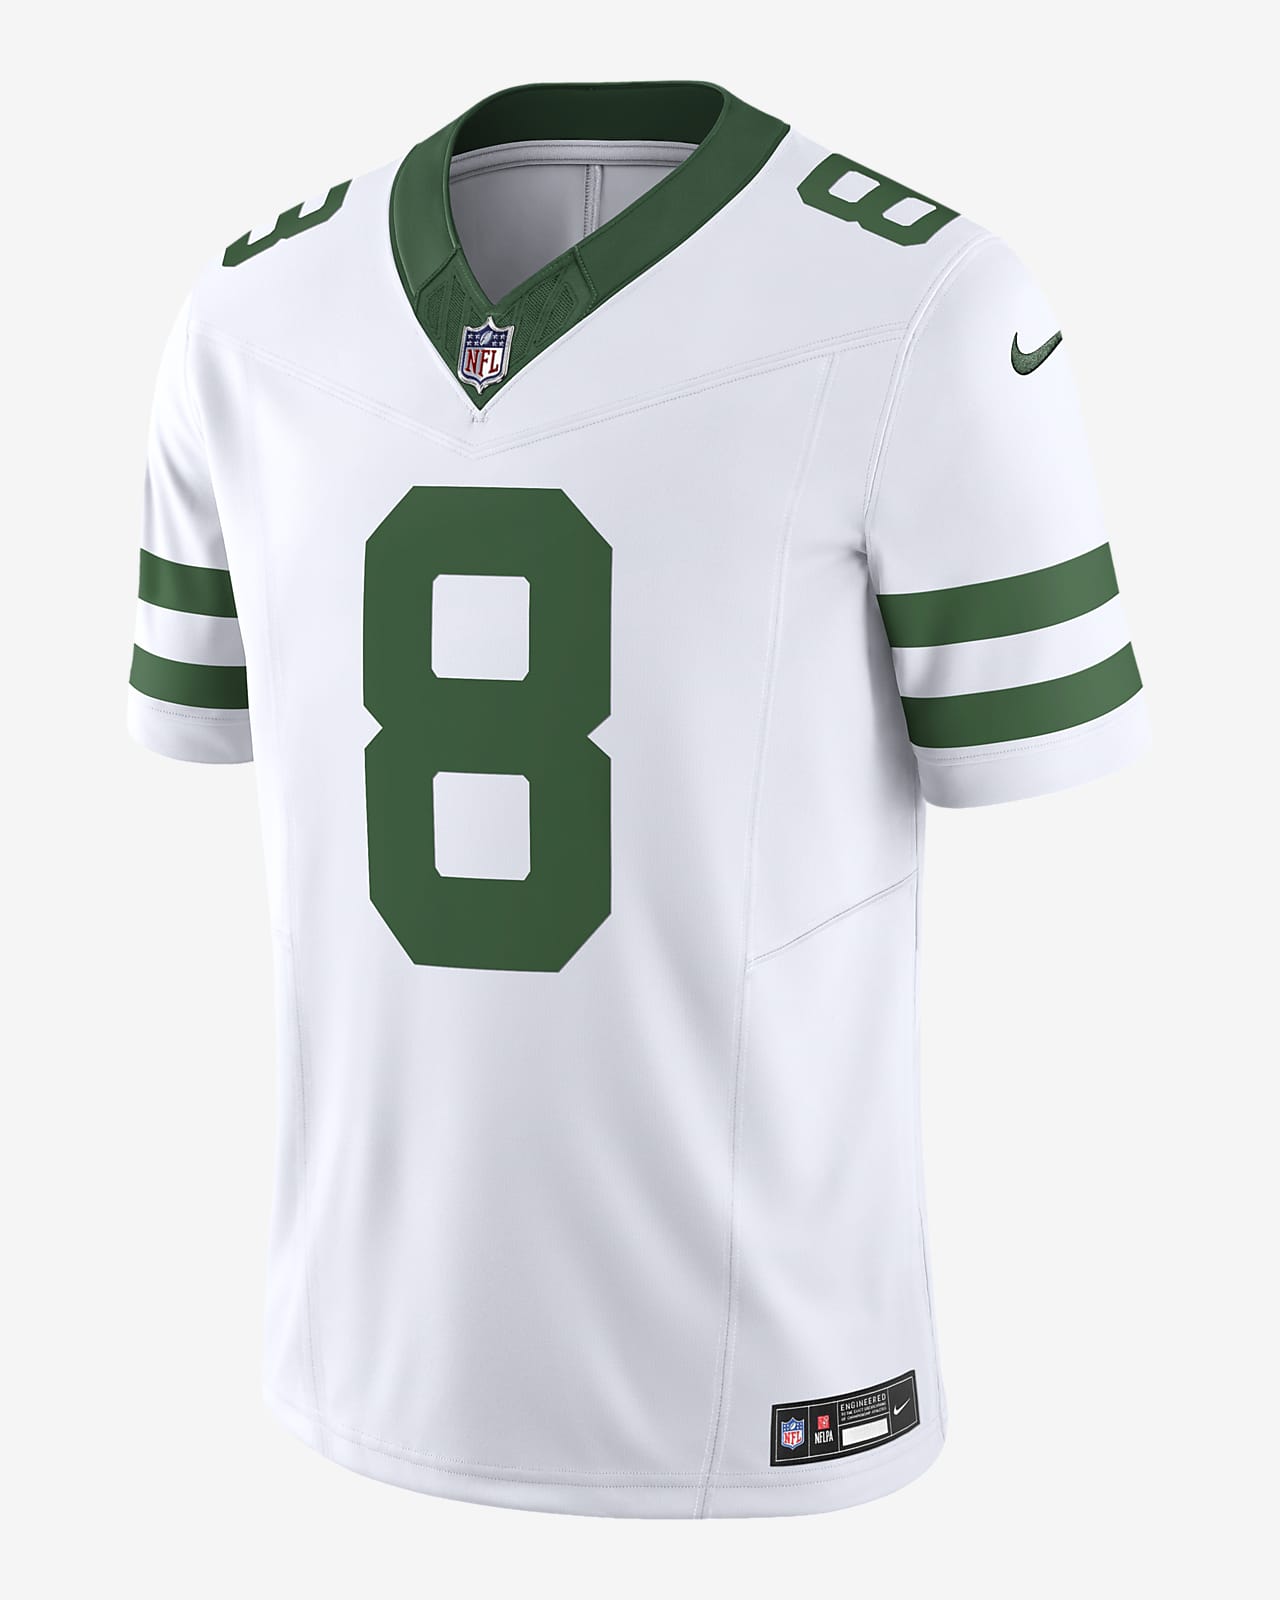 Jersey de fútbol americano Nike Dri-FIT de la NFL Limited para hombre Aaron Rodgers New York Jets